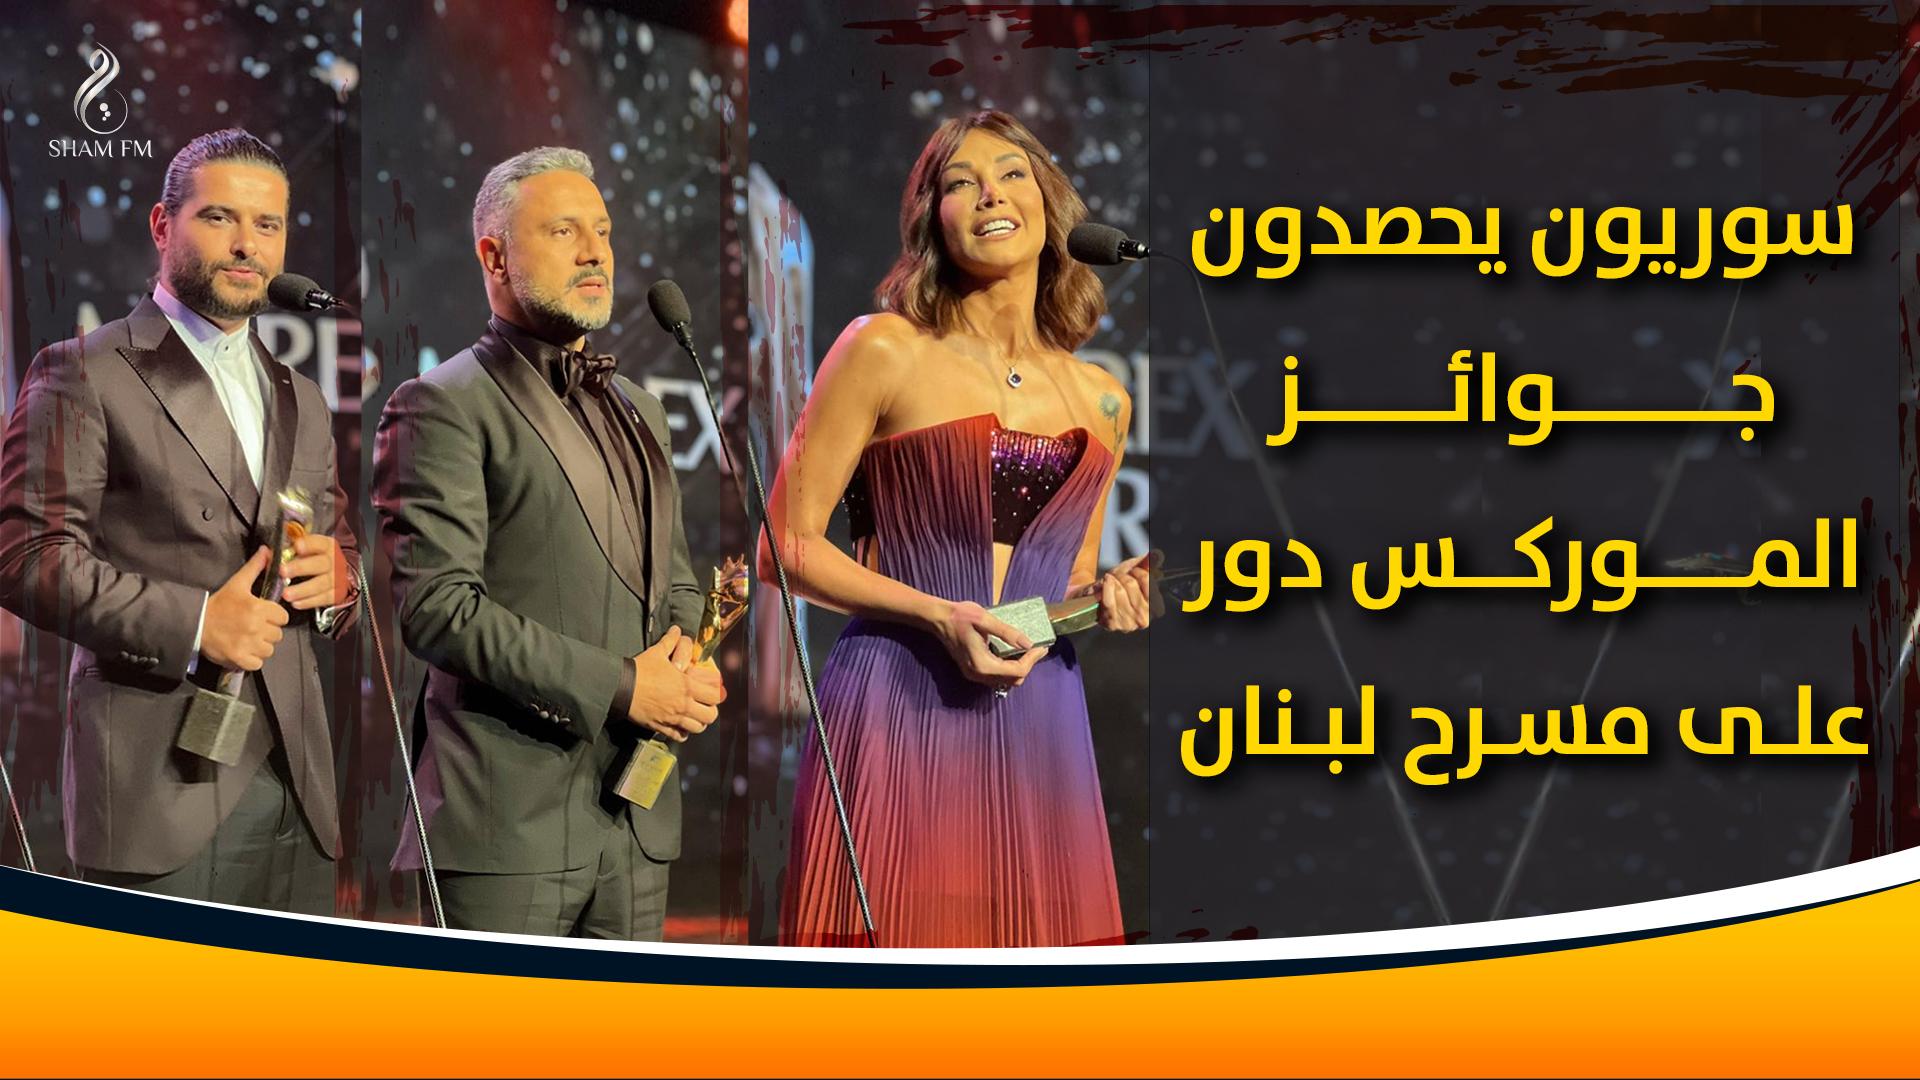 سوريون يحصدون جوائز الموركس دور على مسرح لبنان